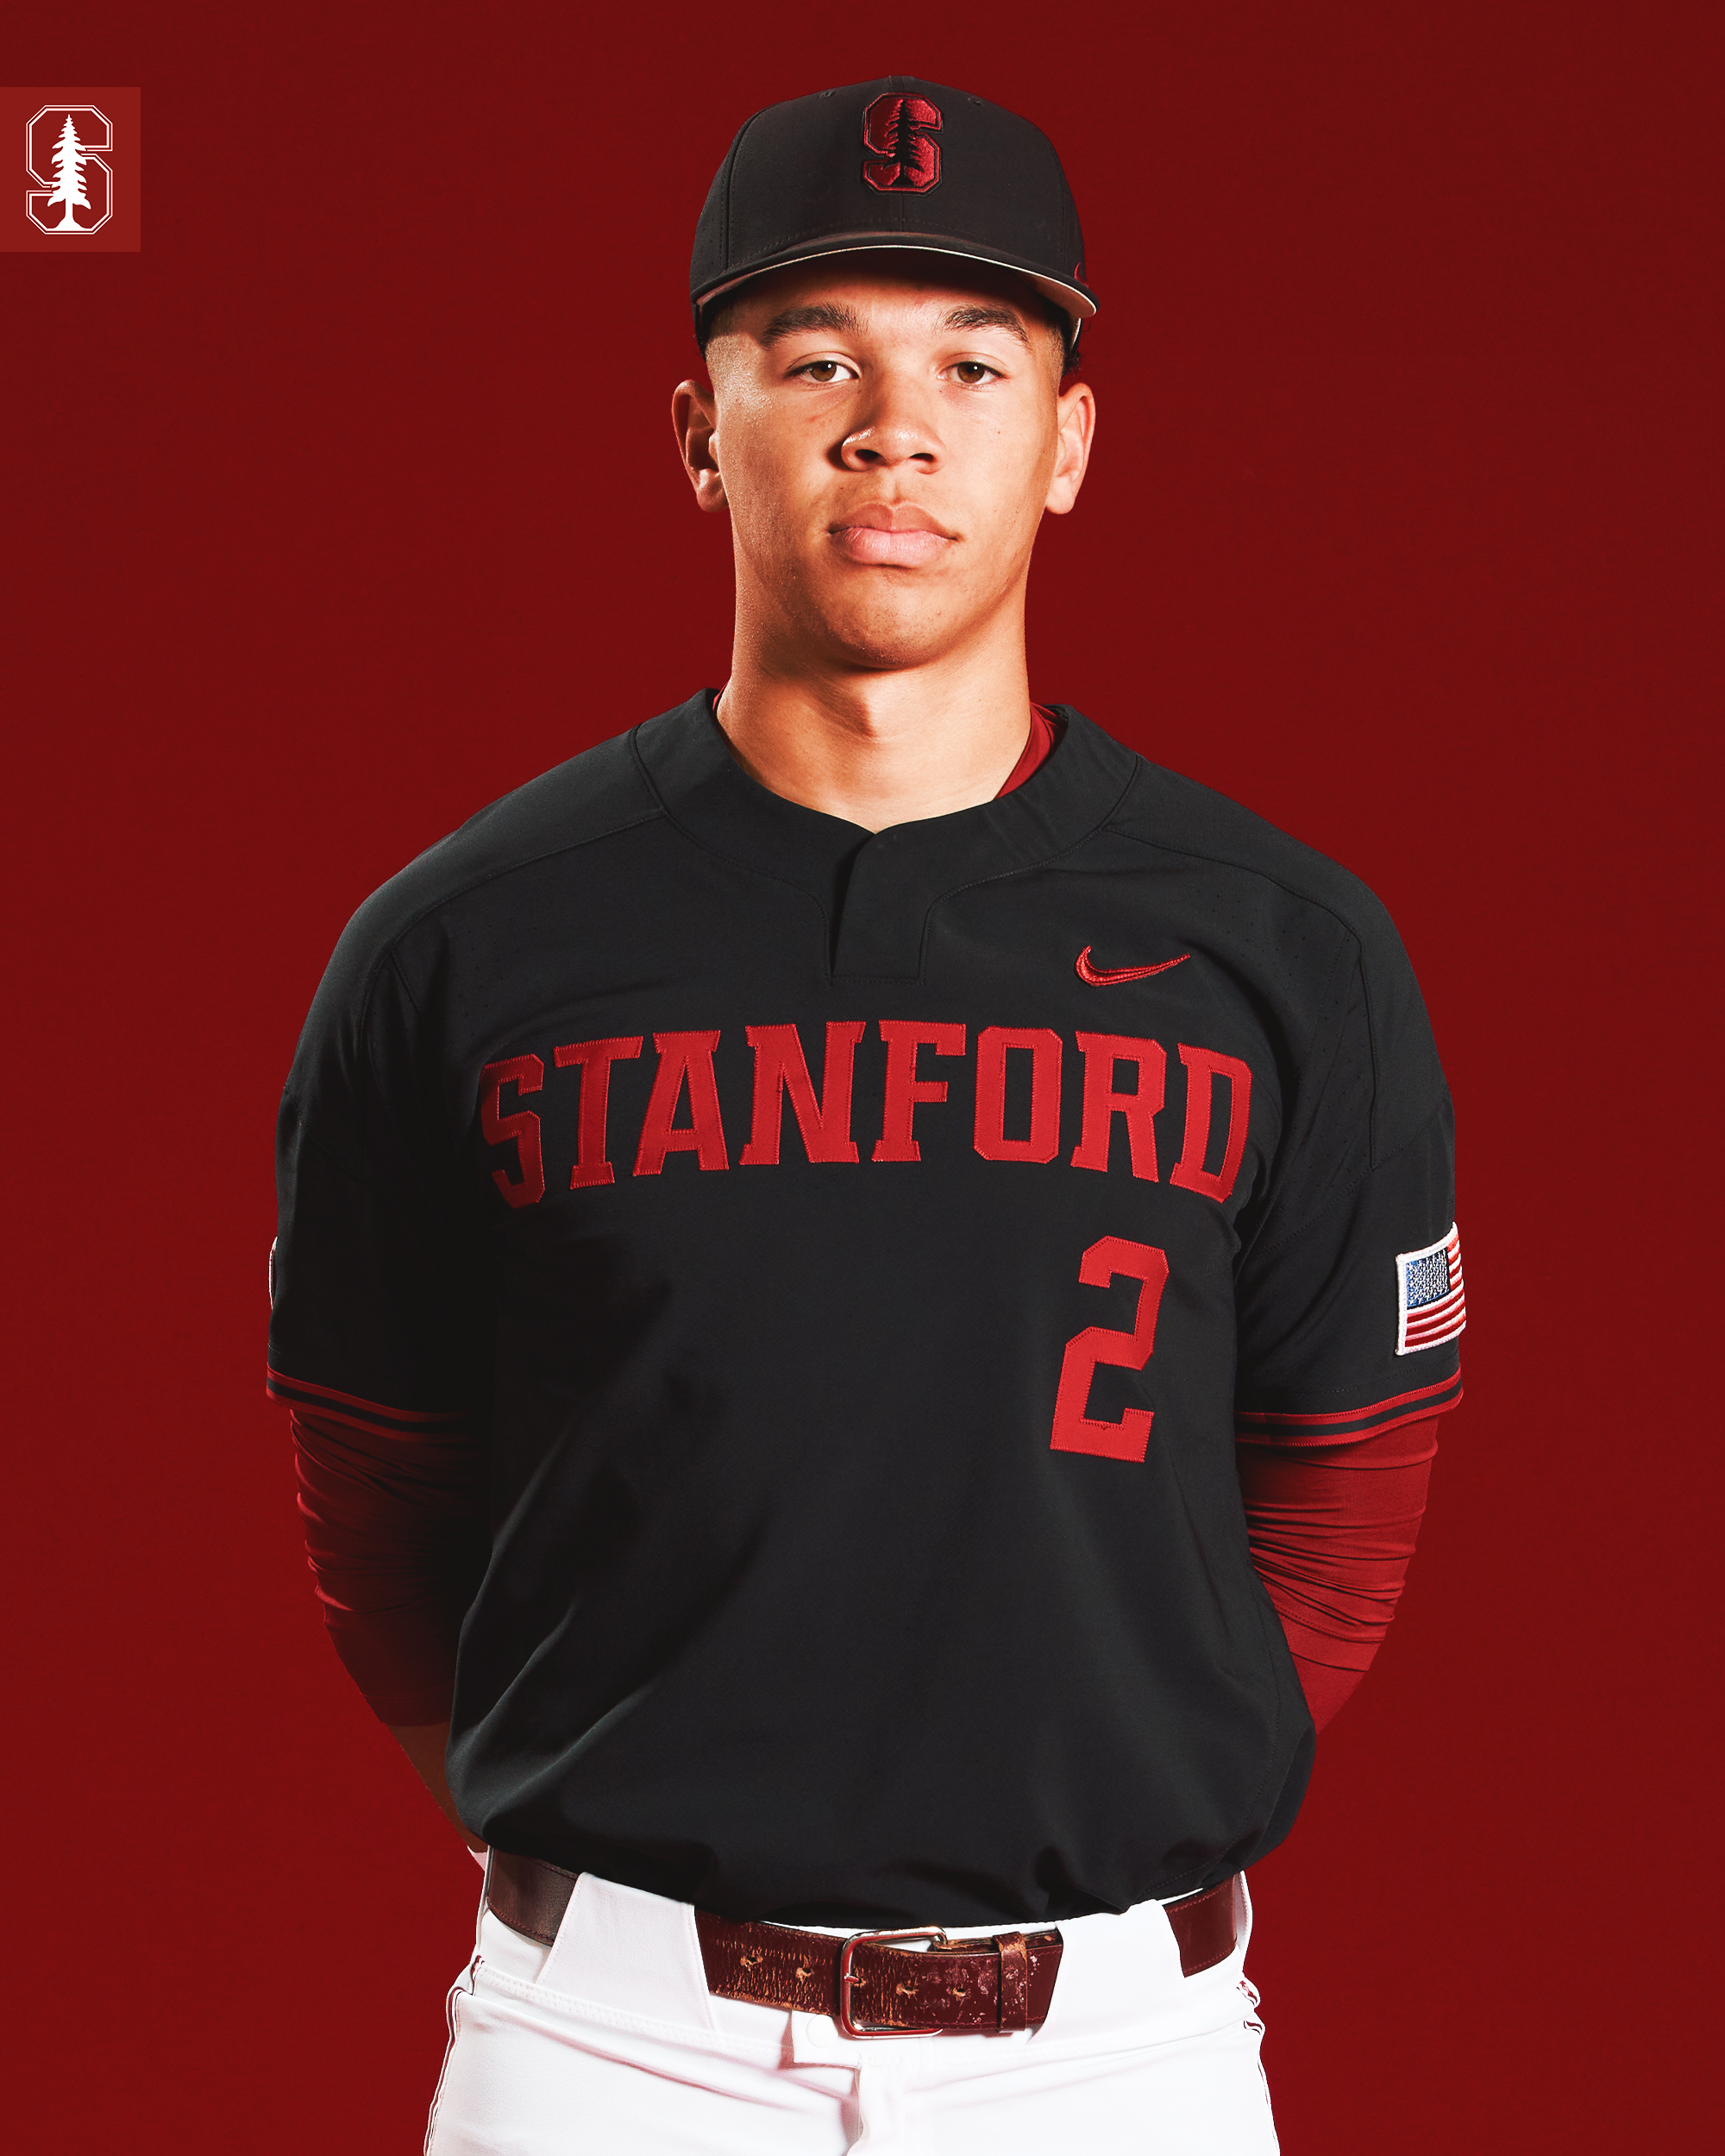 Stanford Baseball on X: 𝗕𝗔𝗖𝗞 𝗜𝗡 𝗕𝗟𝗔𝗖𝗞 Stanford will go